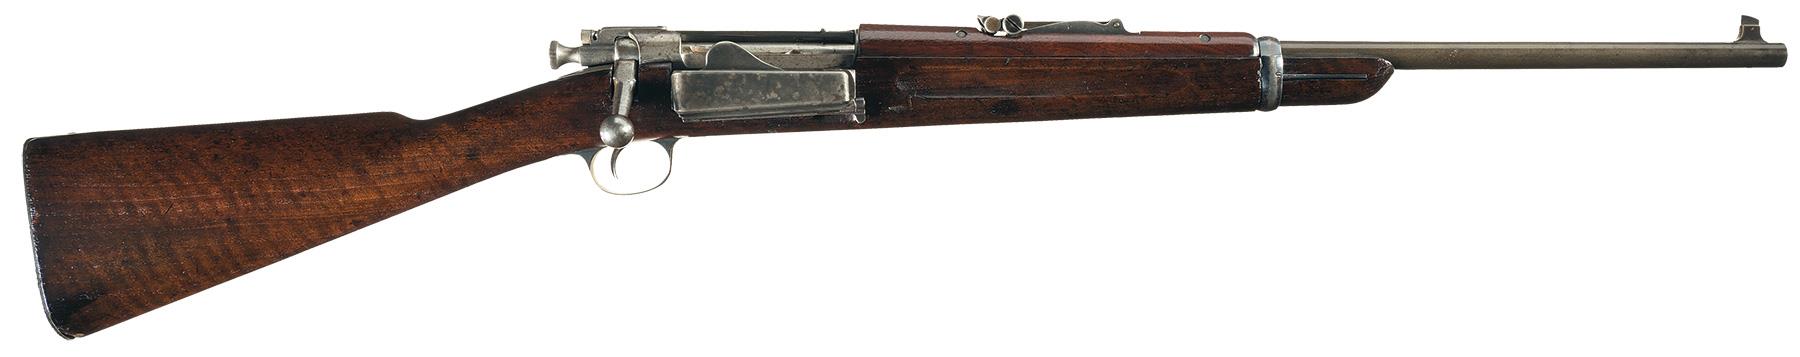 springfield 1898 carbine